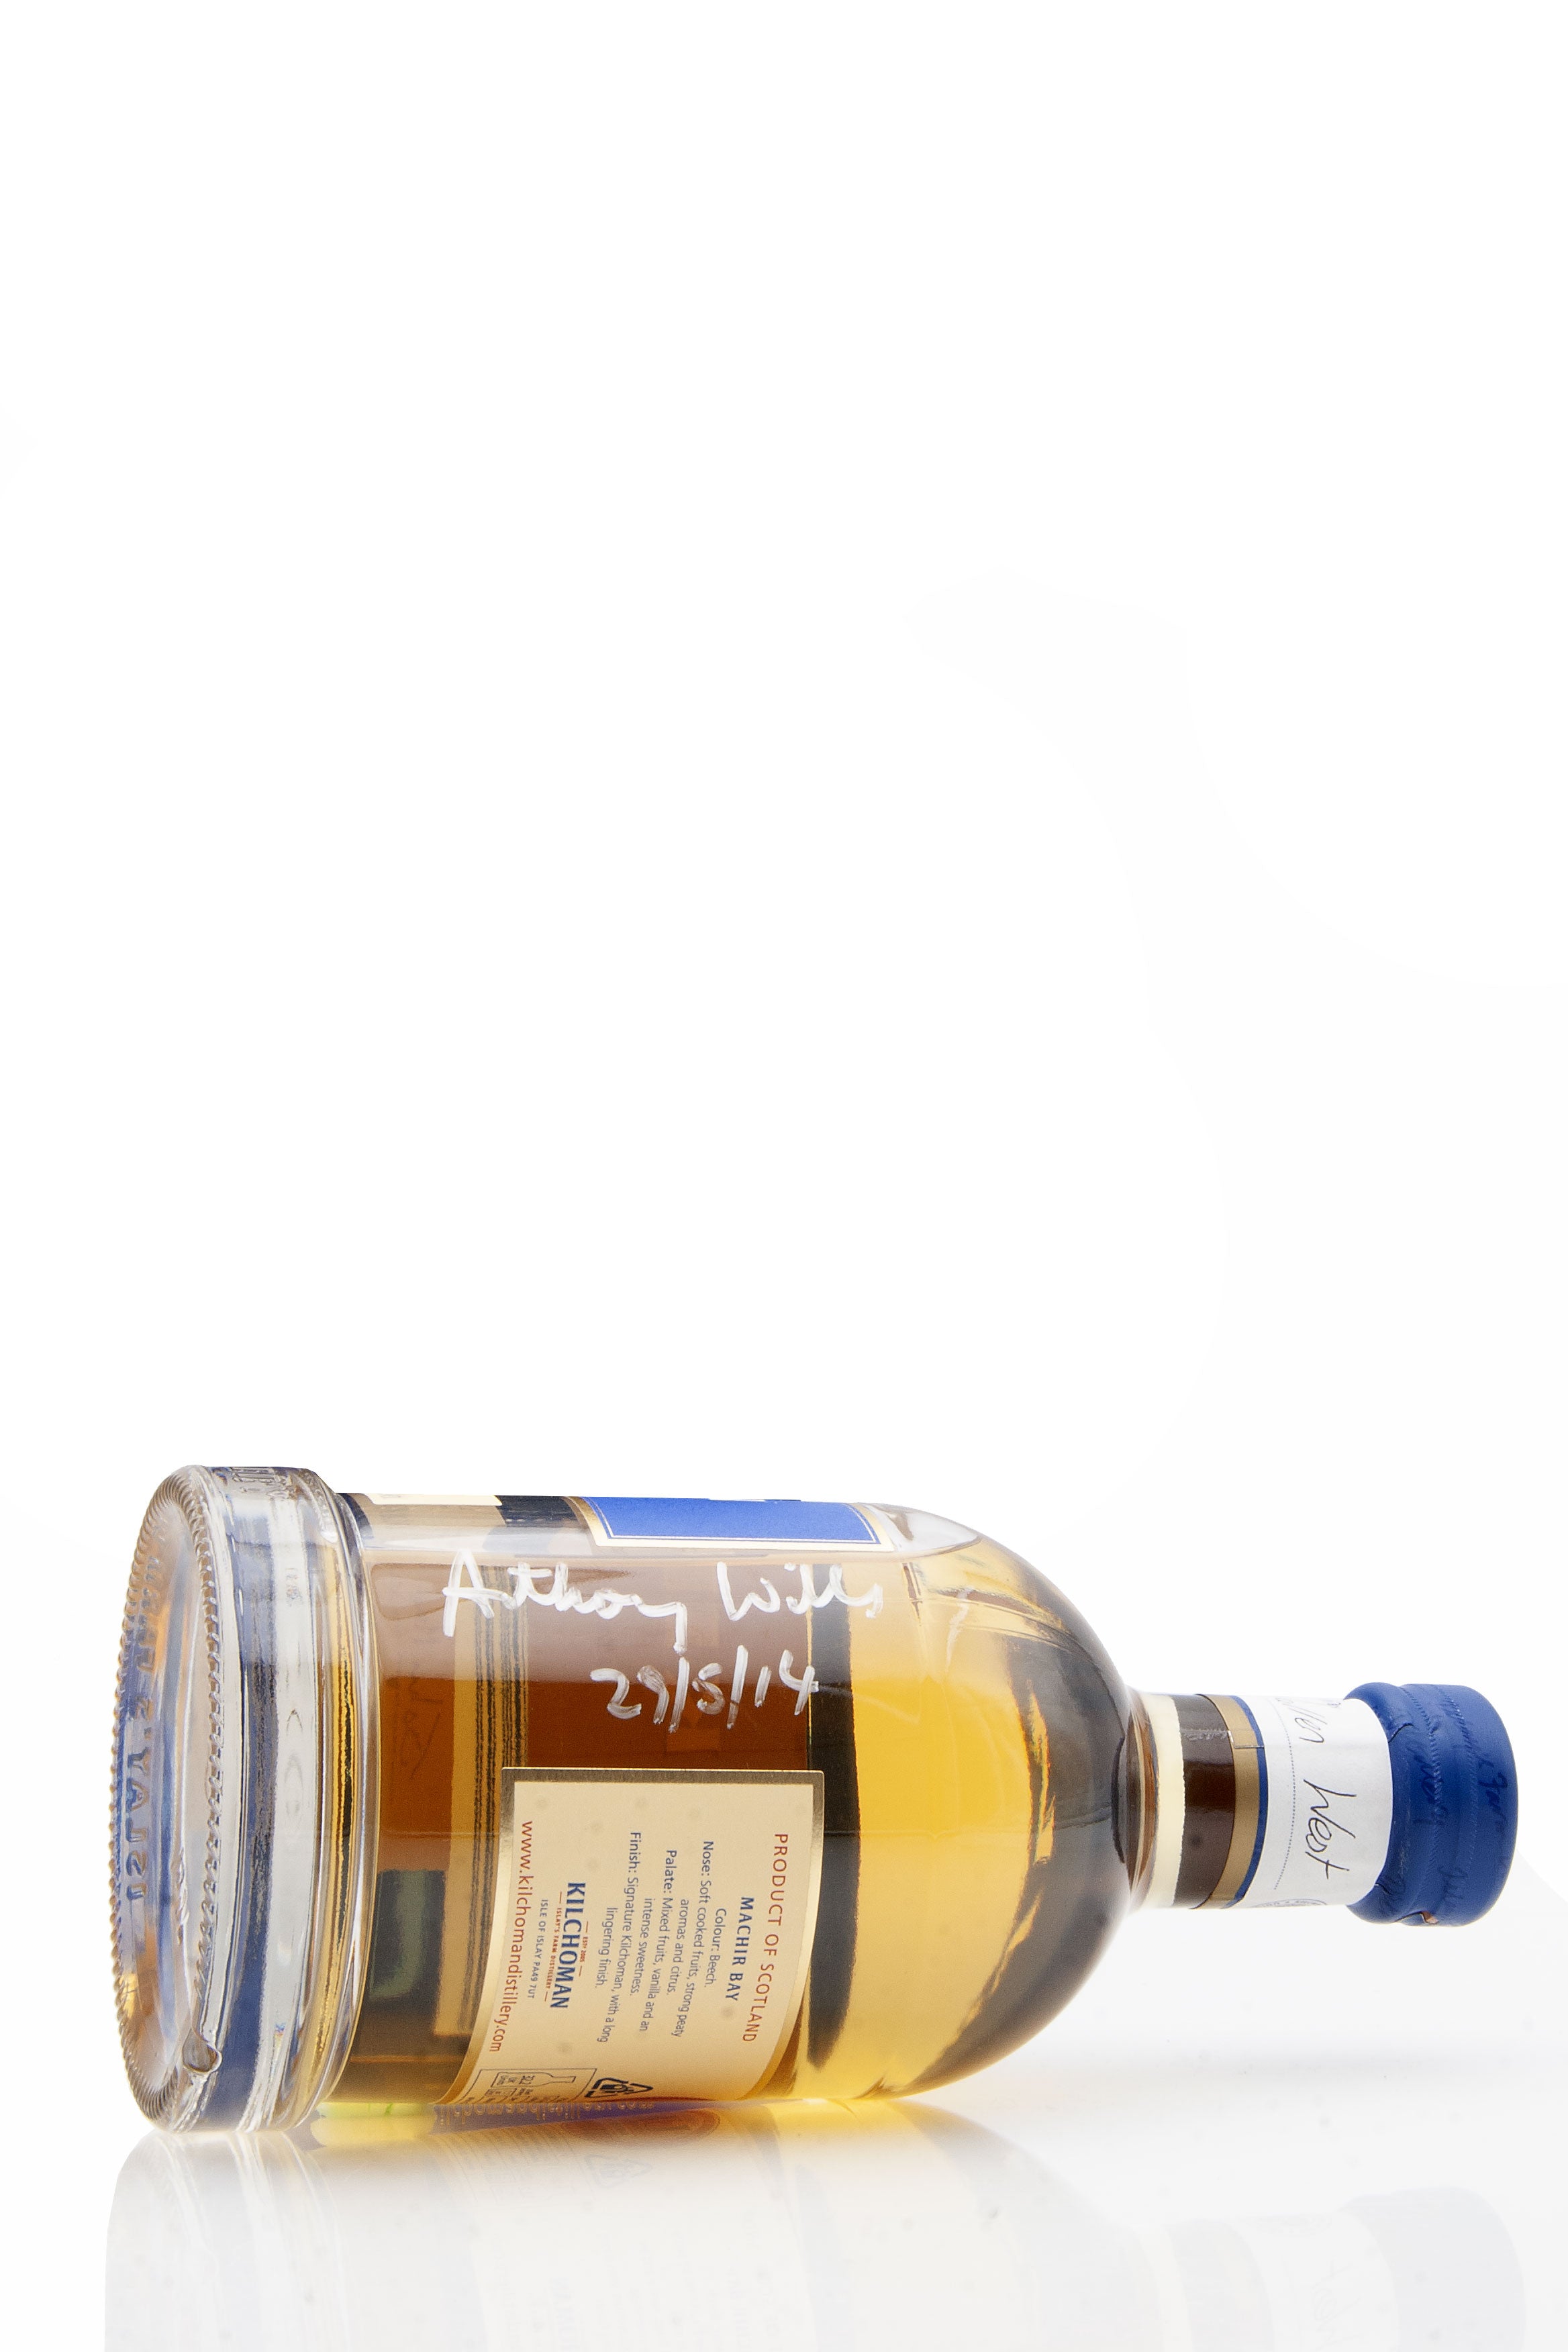 Kilchoman Machir Bay | Feis Ile 2014 | Islay Scotch Malt Whisky | Abbey Whisky